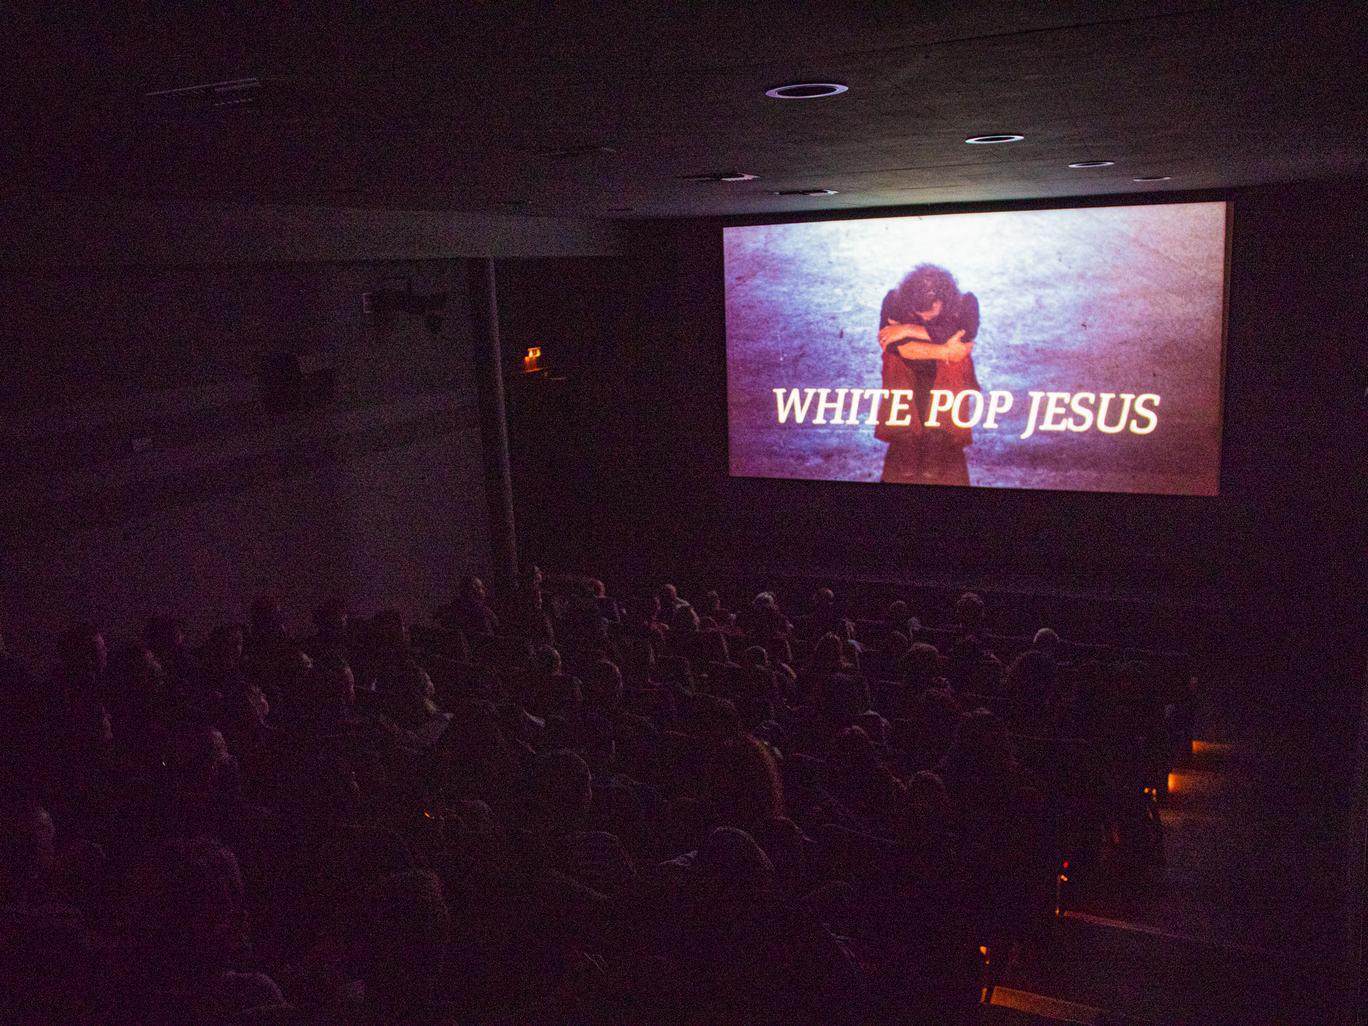 Screening WHITE POP JESUS